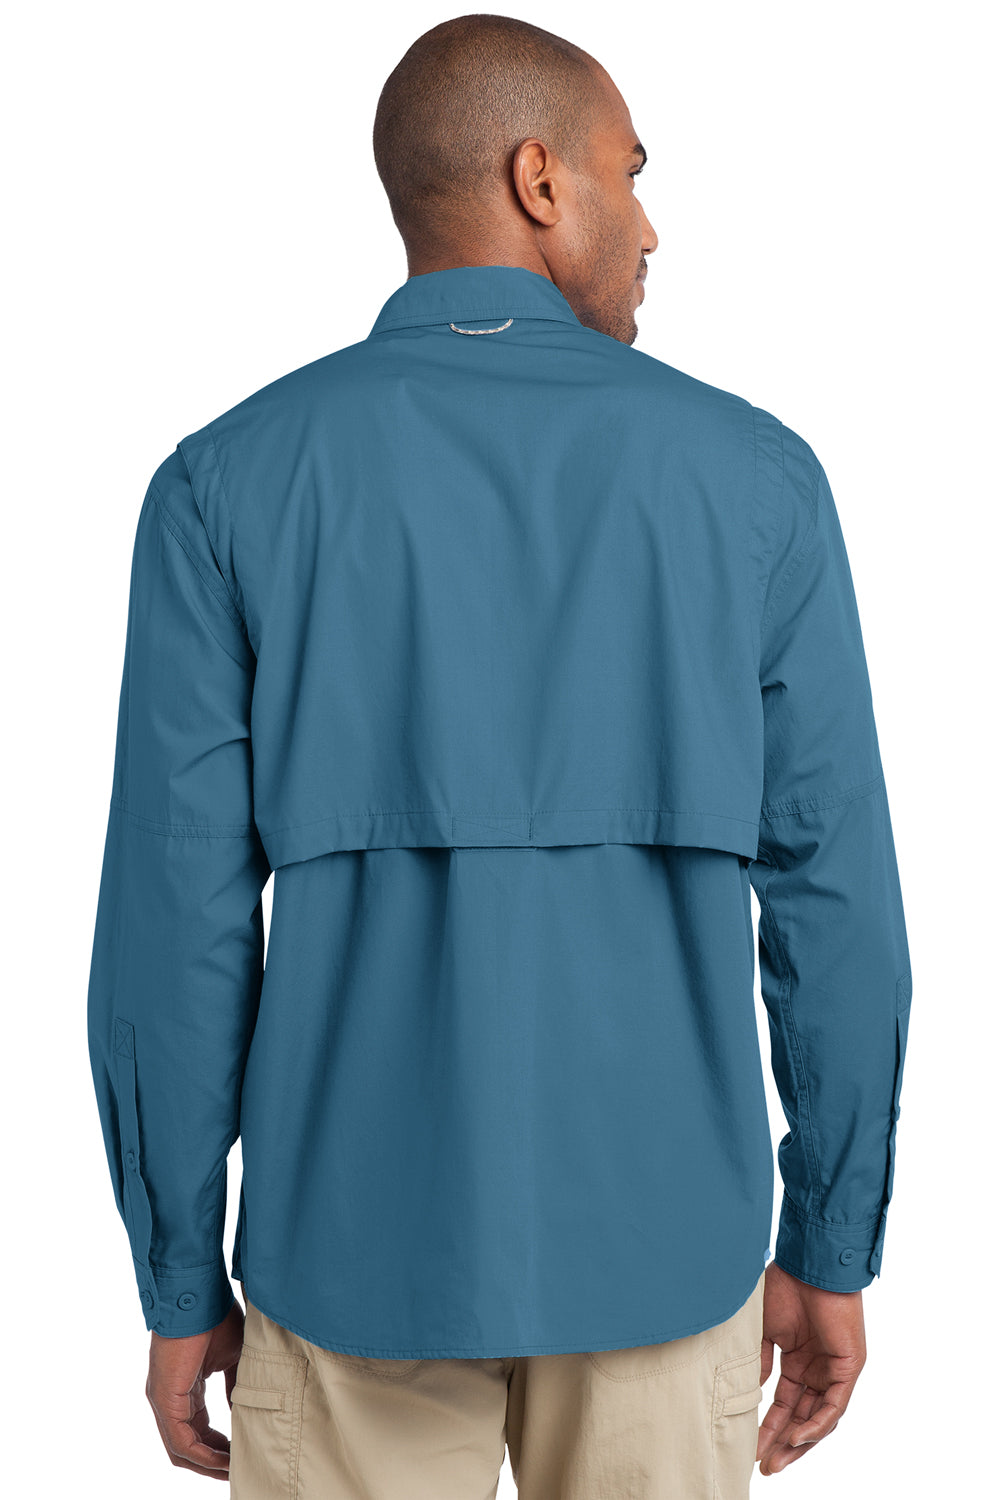 Eddie Bauer EB606 Mens Fishing Long Sleeve Button Down Shirt w/ Double Pockets Blue Gill Back